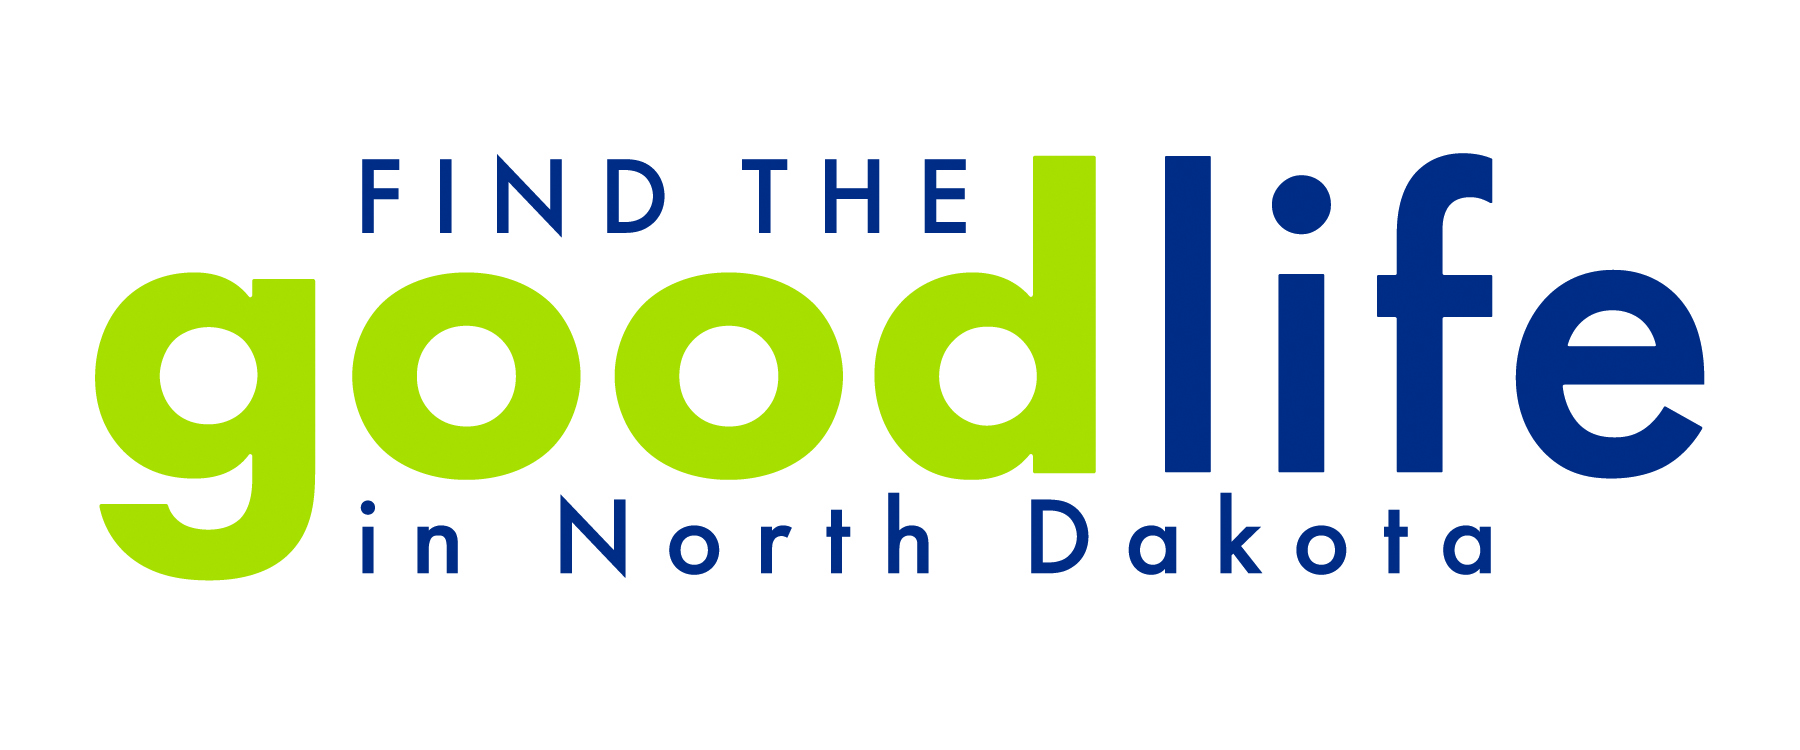 Find The Good Life in North Dakota